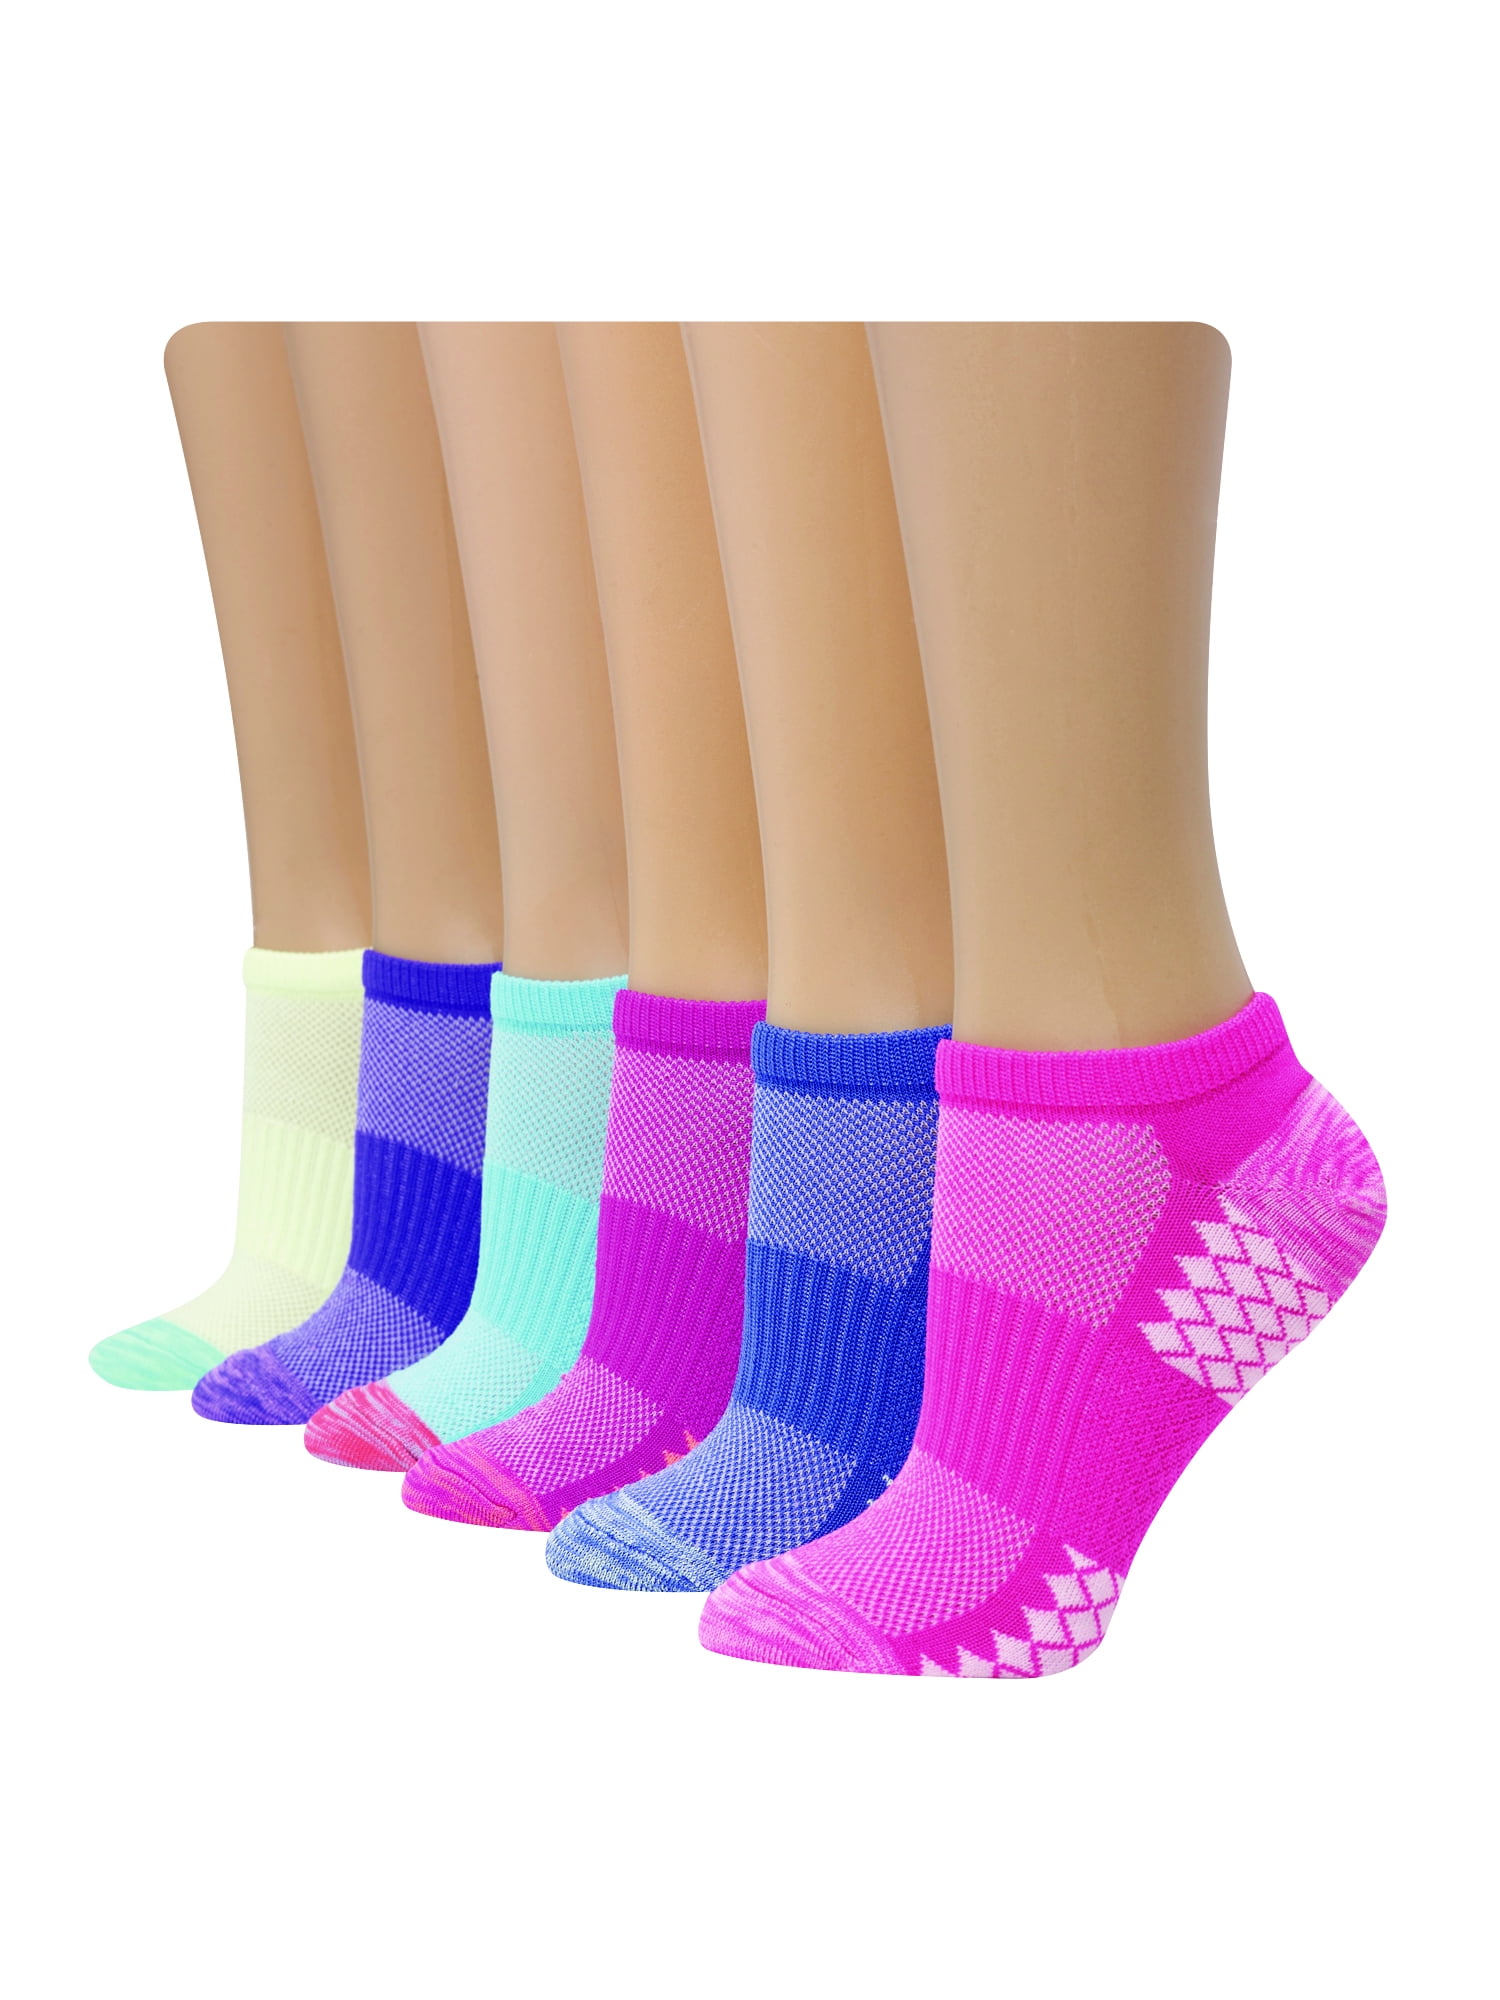 Hanes Women's Performance Cool No-Show Socks 6 pack - Walmart.com